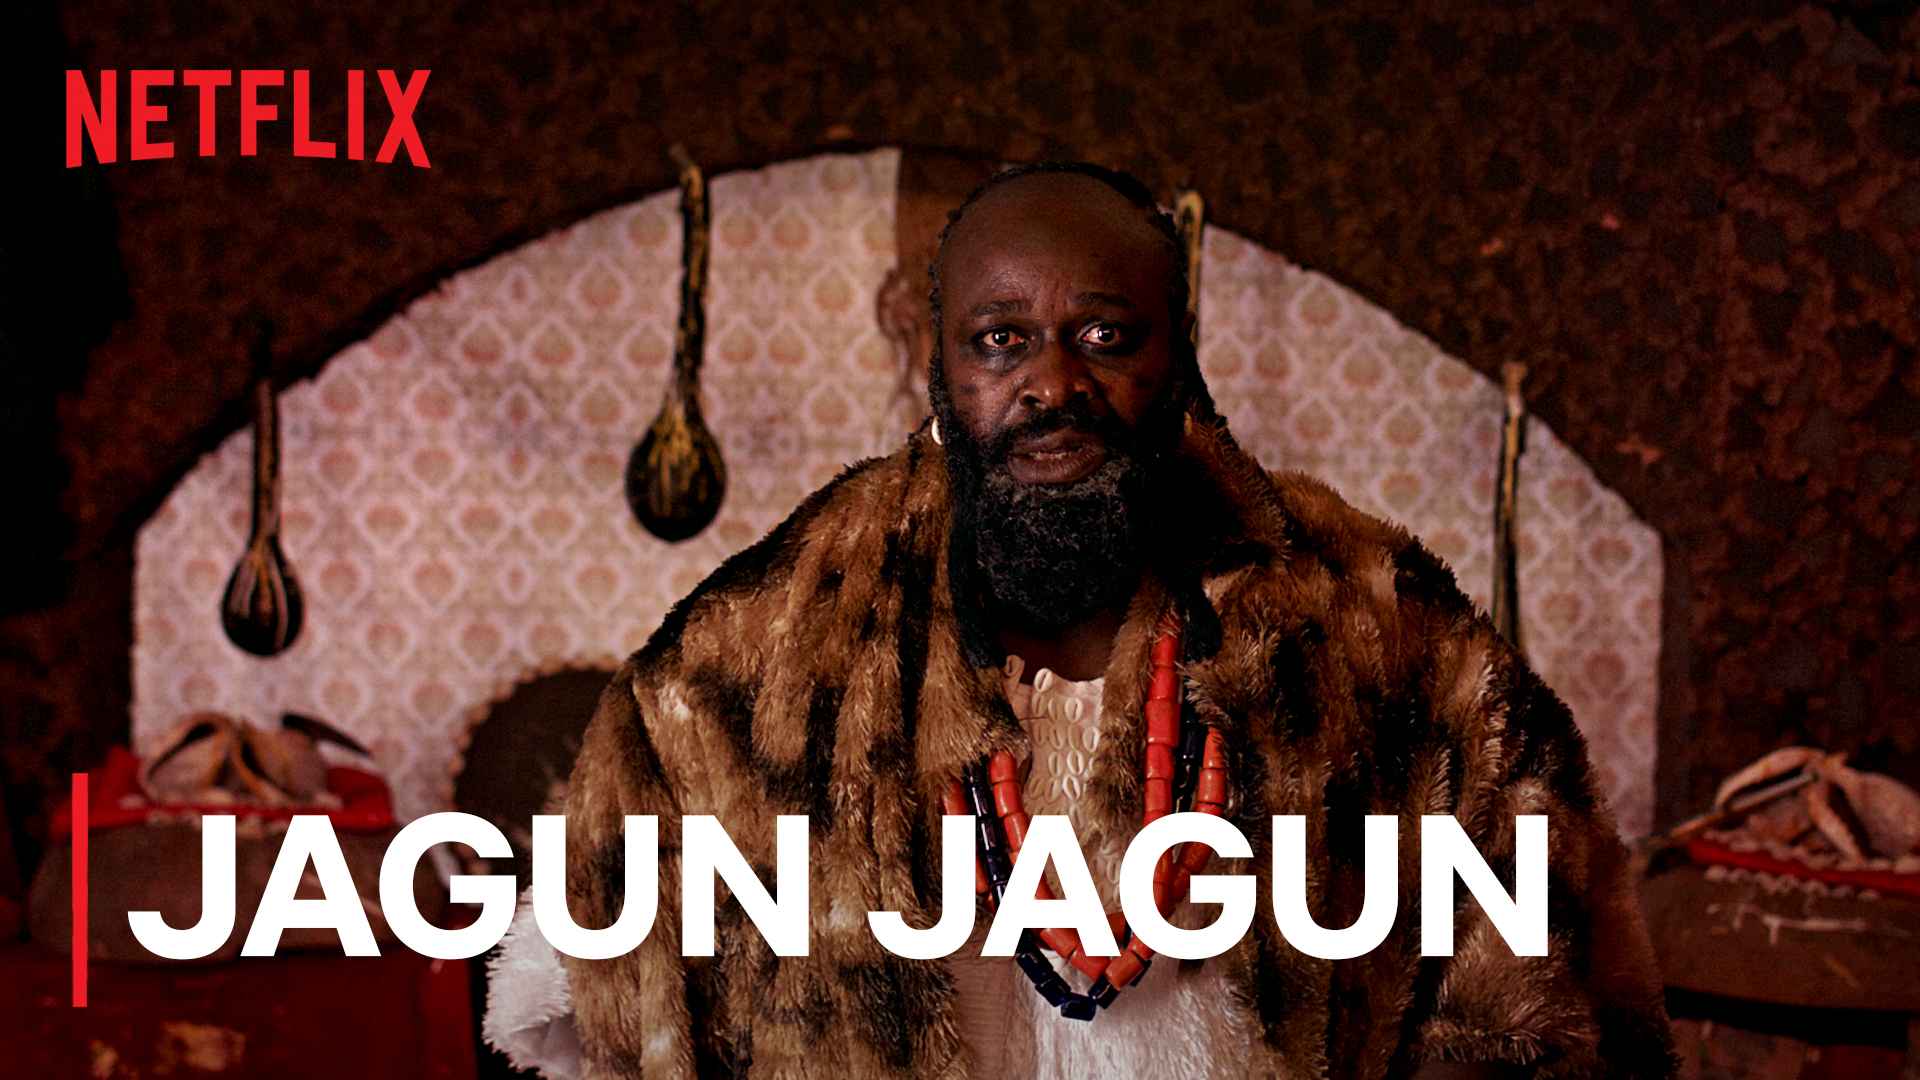 Femi Adebayo shares review of 'Jagun Jagun' P.M. News